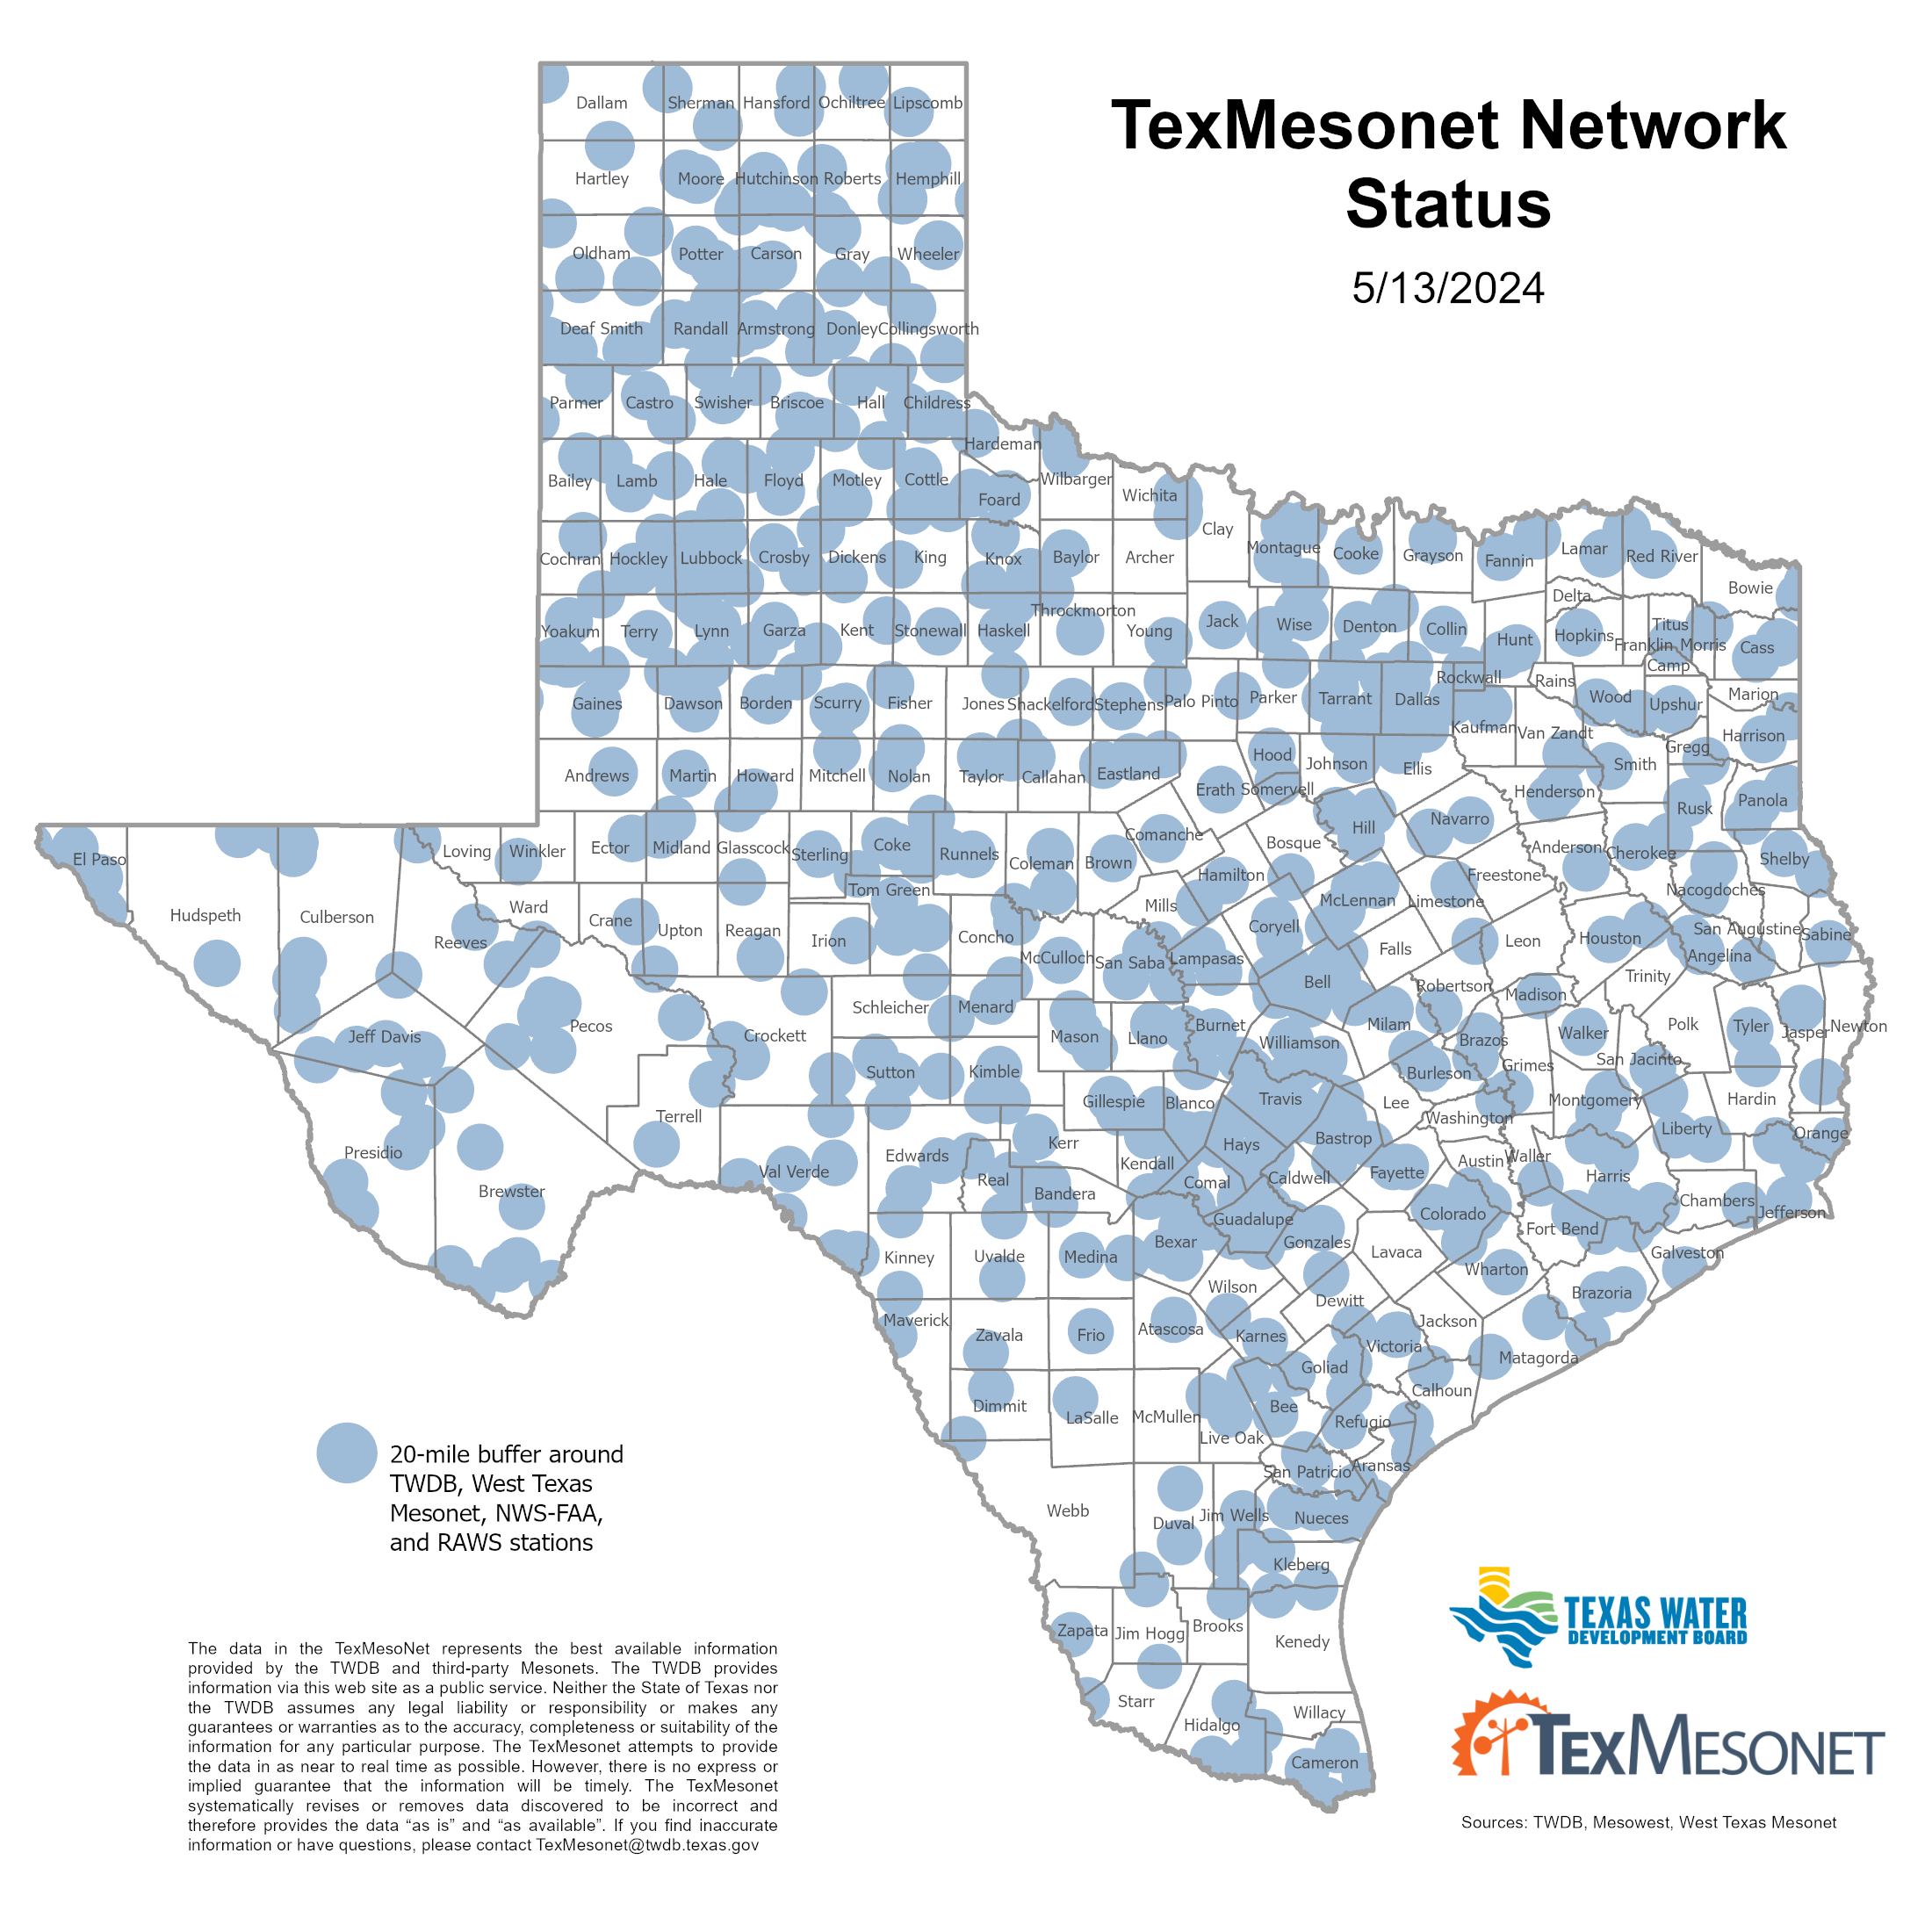 TexMesonet Network Coverage